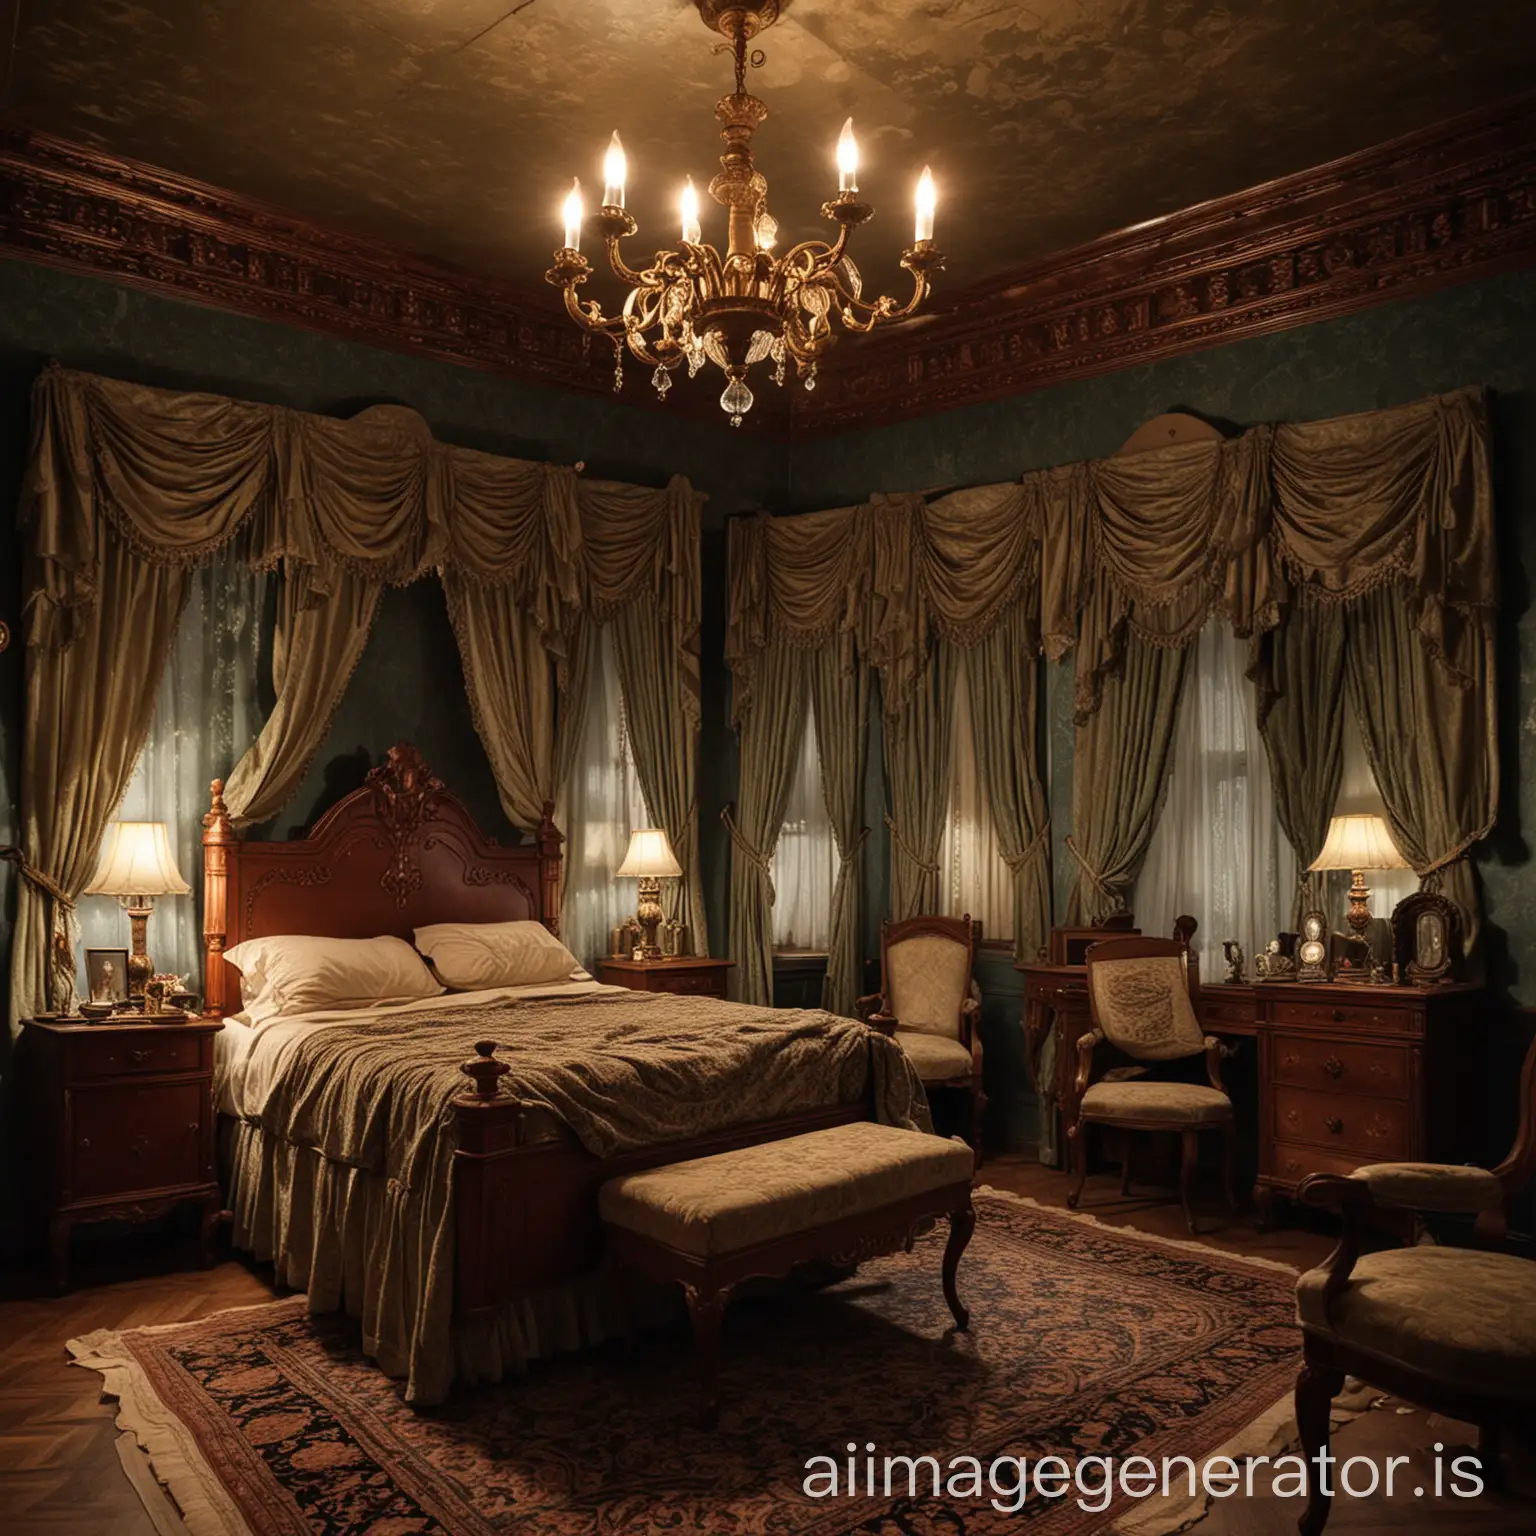 Victorian era bedroom, night